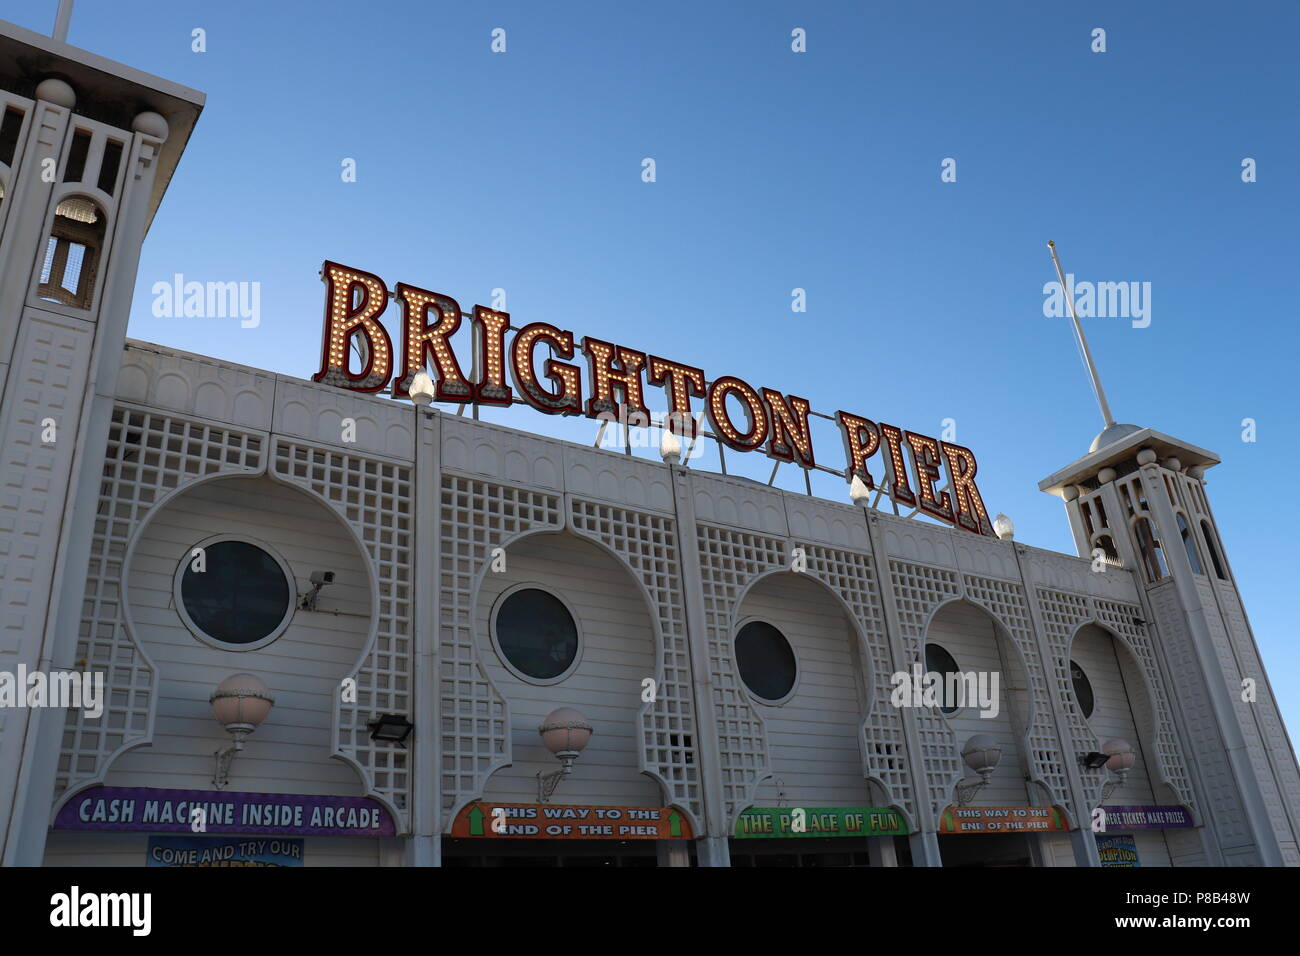 Brighton Pier sign illuminated on a sunny day against a blue sky Stock Photo